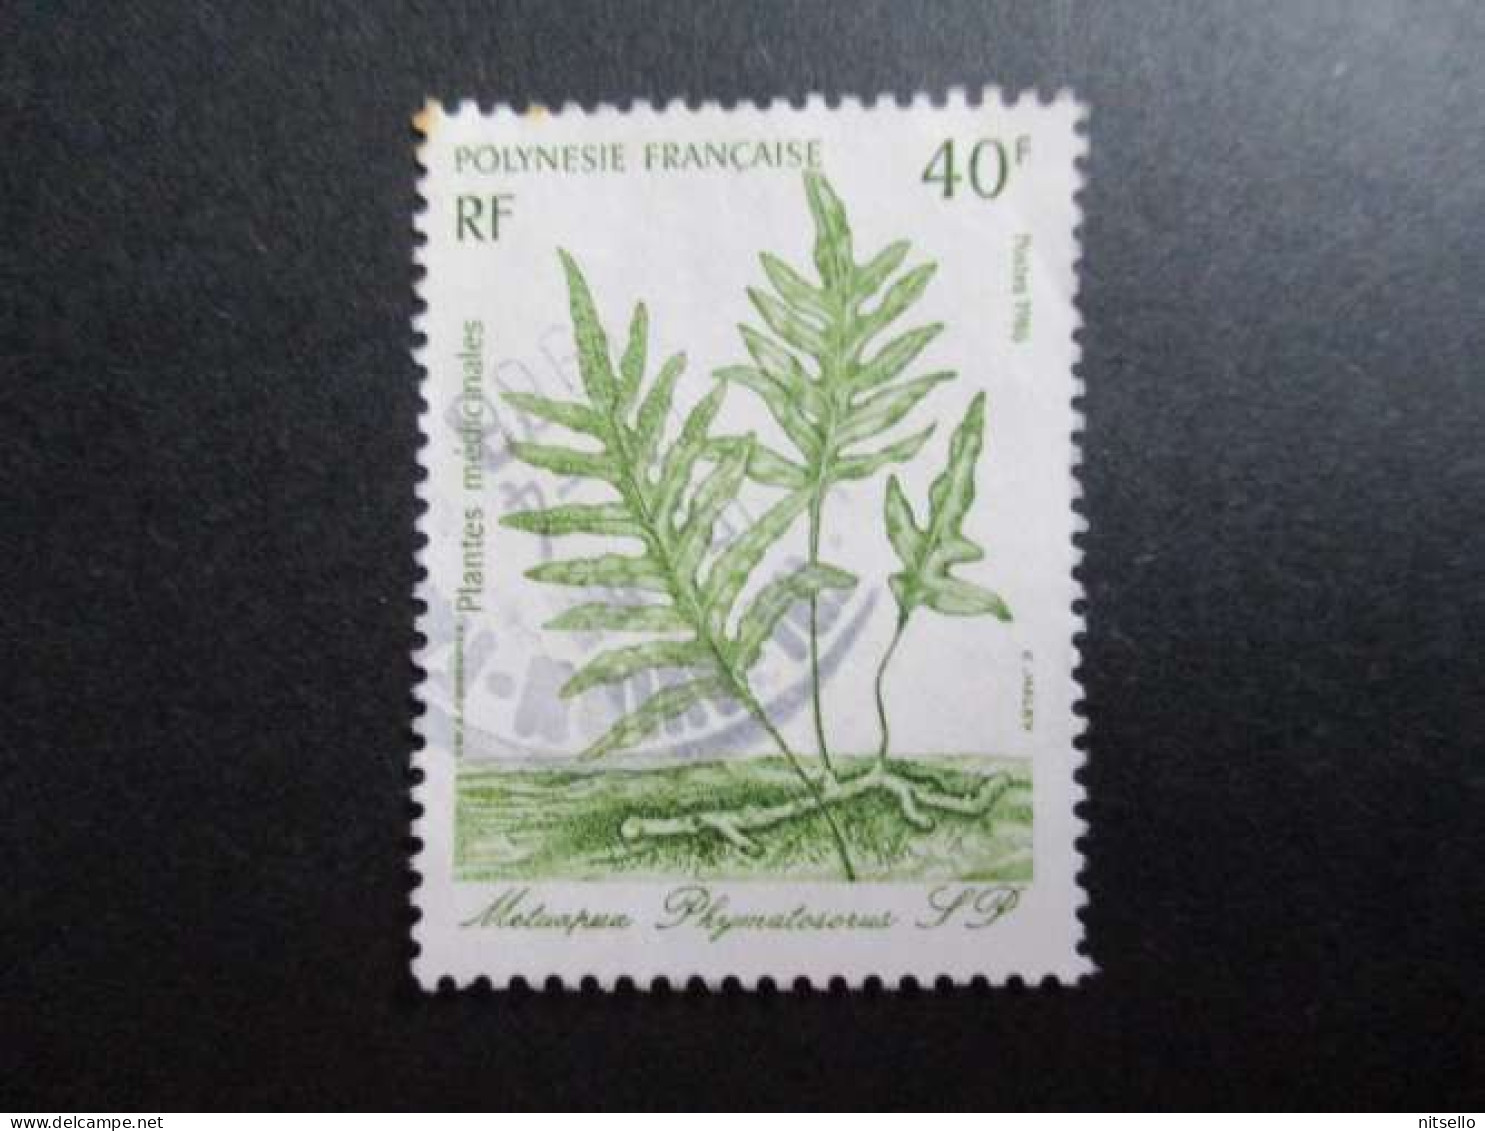 LOTE 2202A ///  (C020)  POLINESIA FRANCESA  - YVERT Nº:  268 OBL 1986     ¡¡¡ OFERTA - LIQUIDATION - JE LIQUIDE !!! - Used Stamps